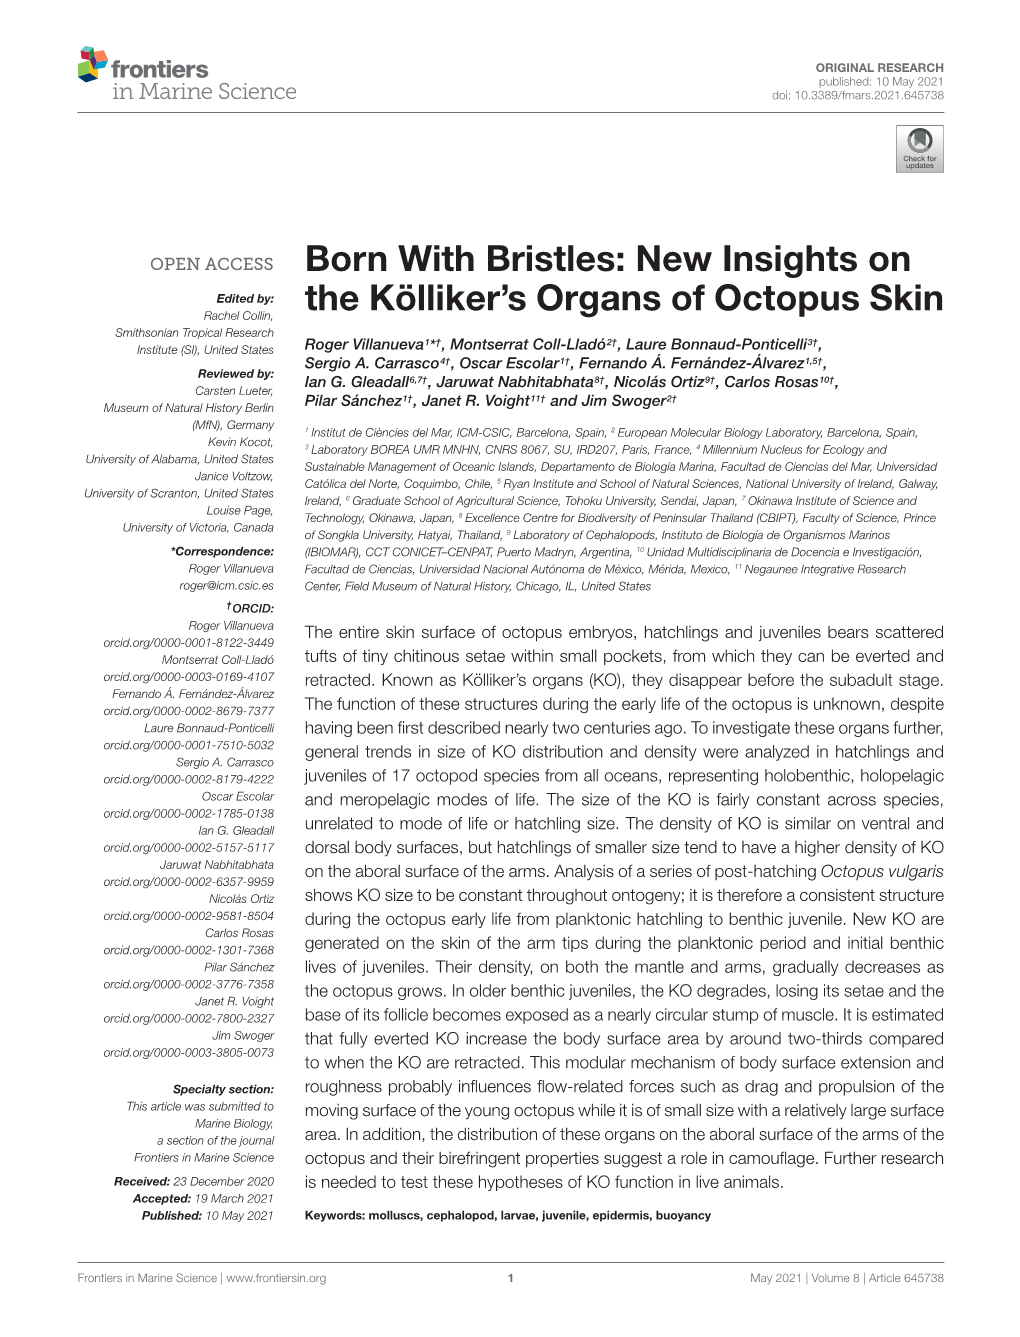 Born with Bristles: New Insights on the KÃ¶Lliker's Organs of Octopus Skin